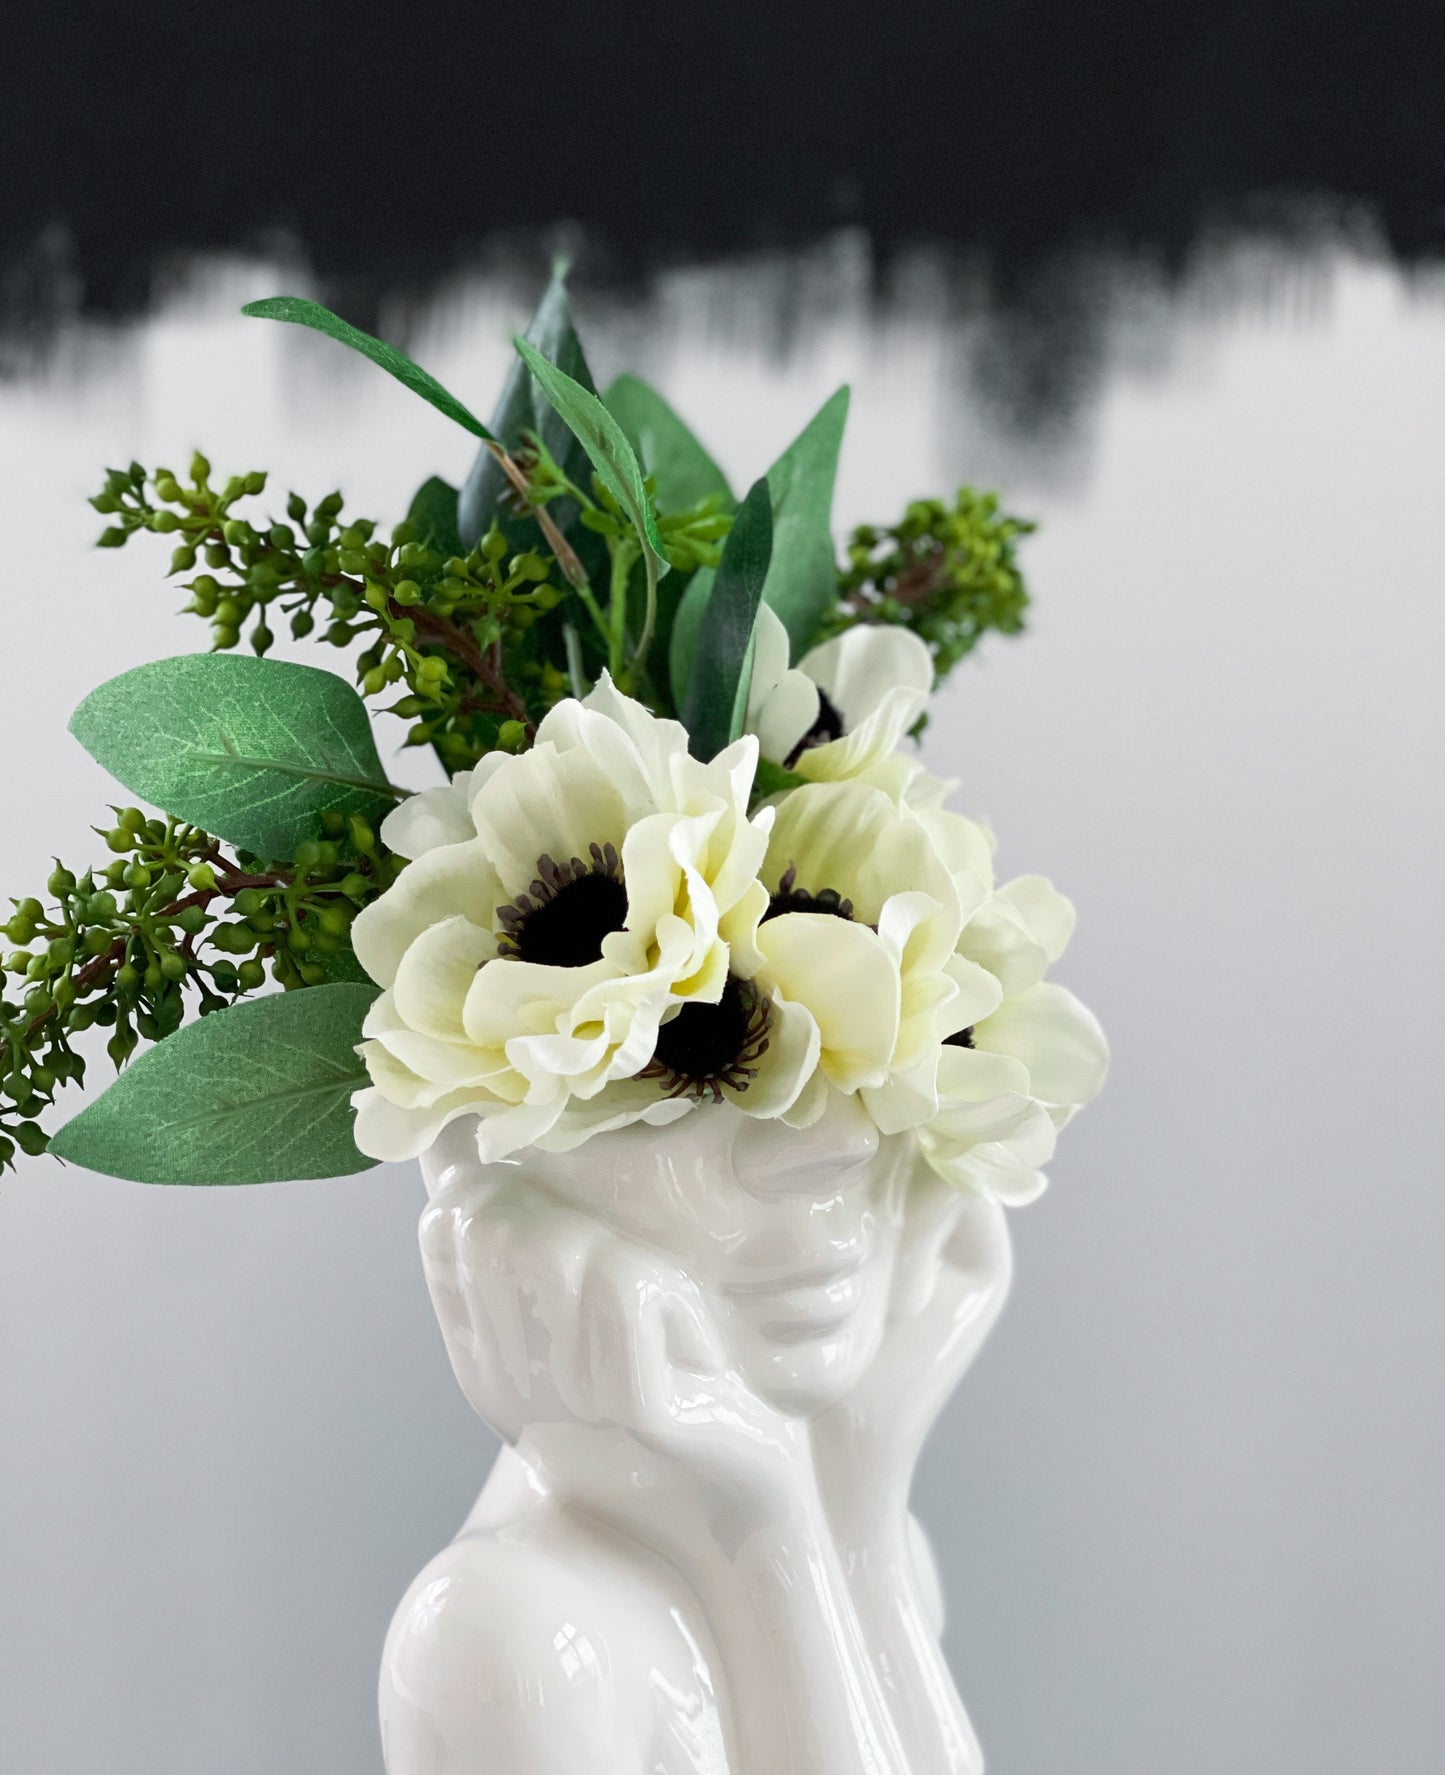 Lady Head Vase Arrangement with Artificial Anemones & Eucalyptus